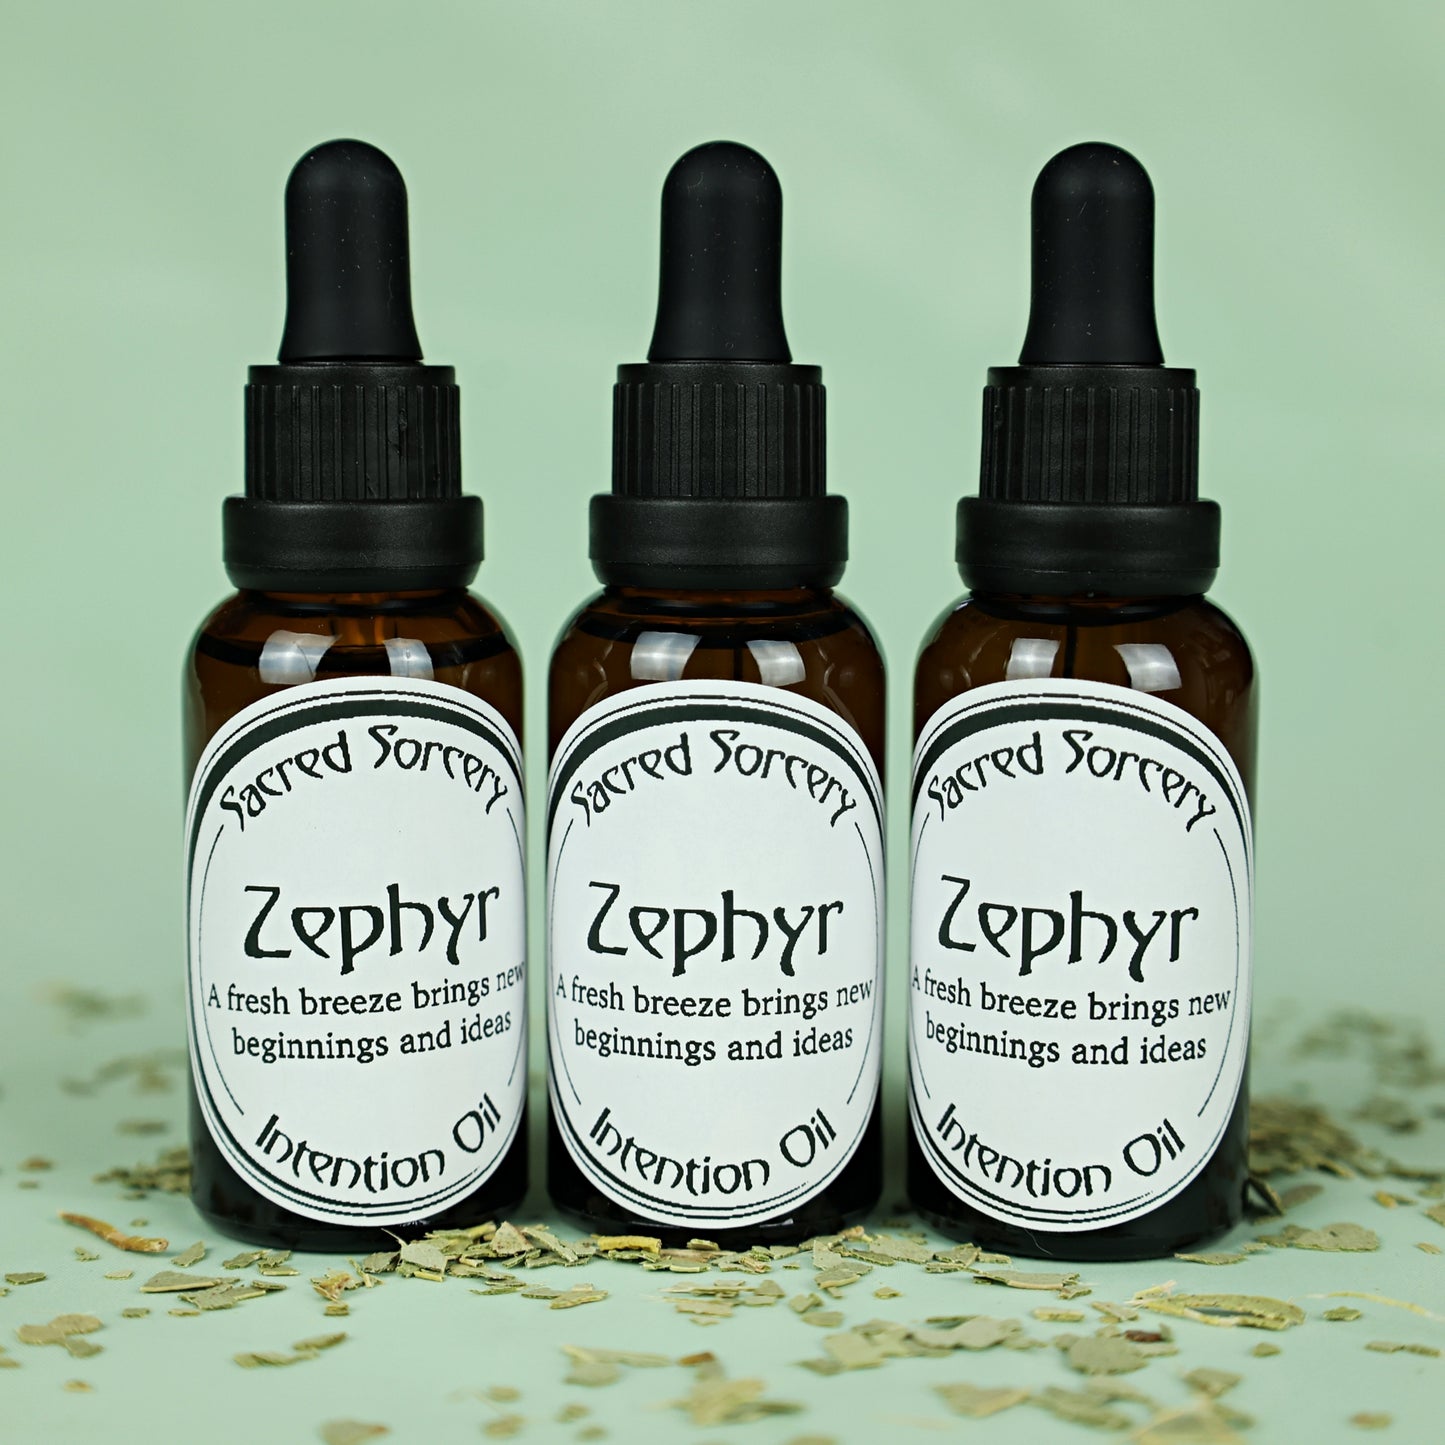 Zephyr intention oil